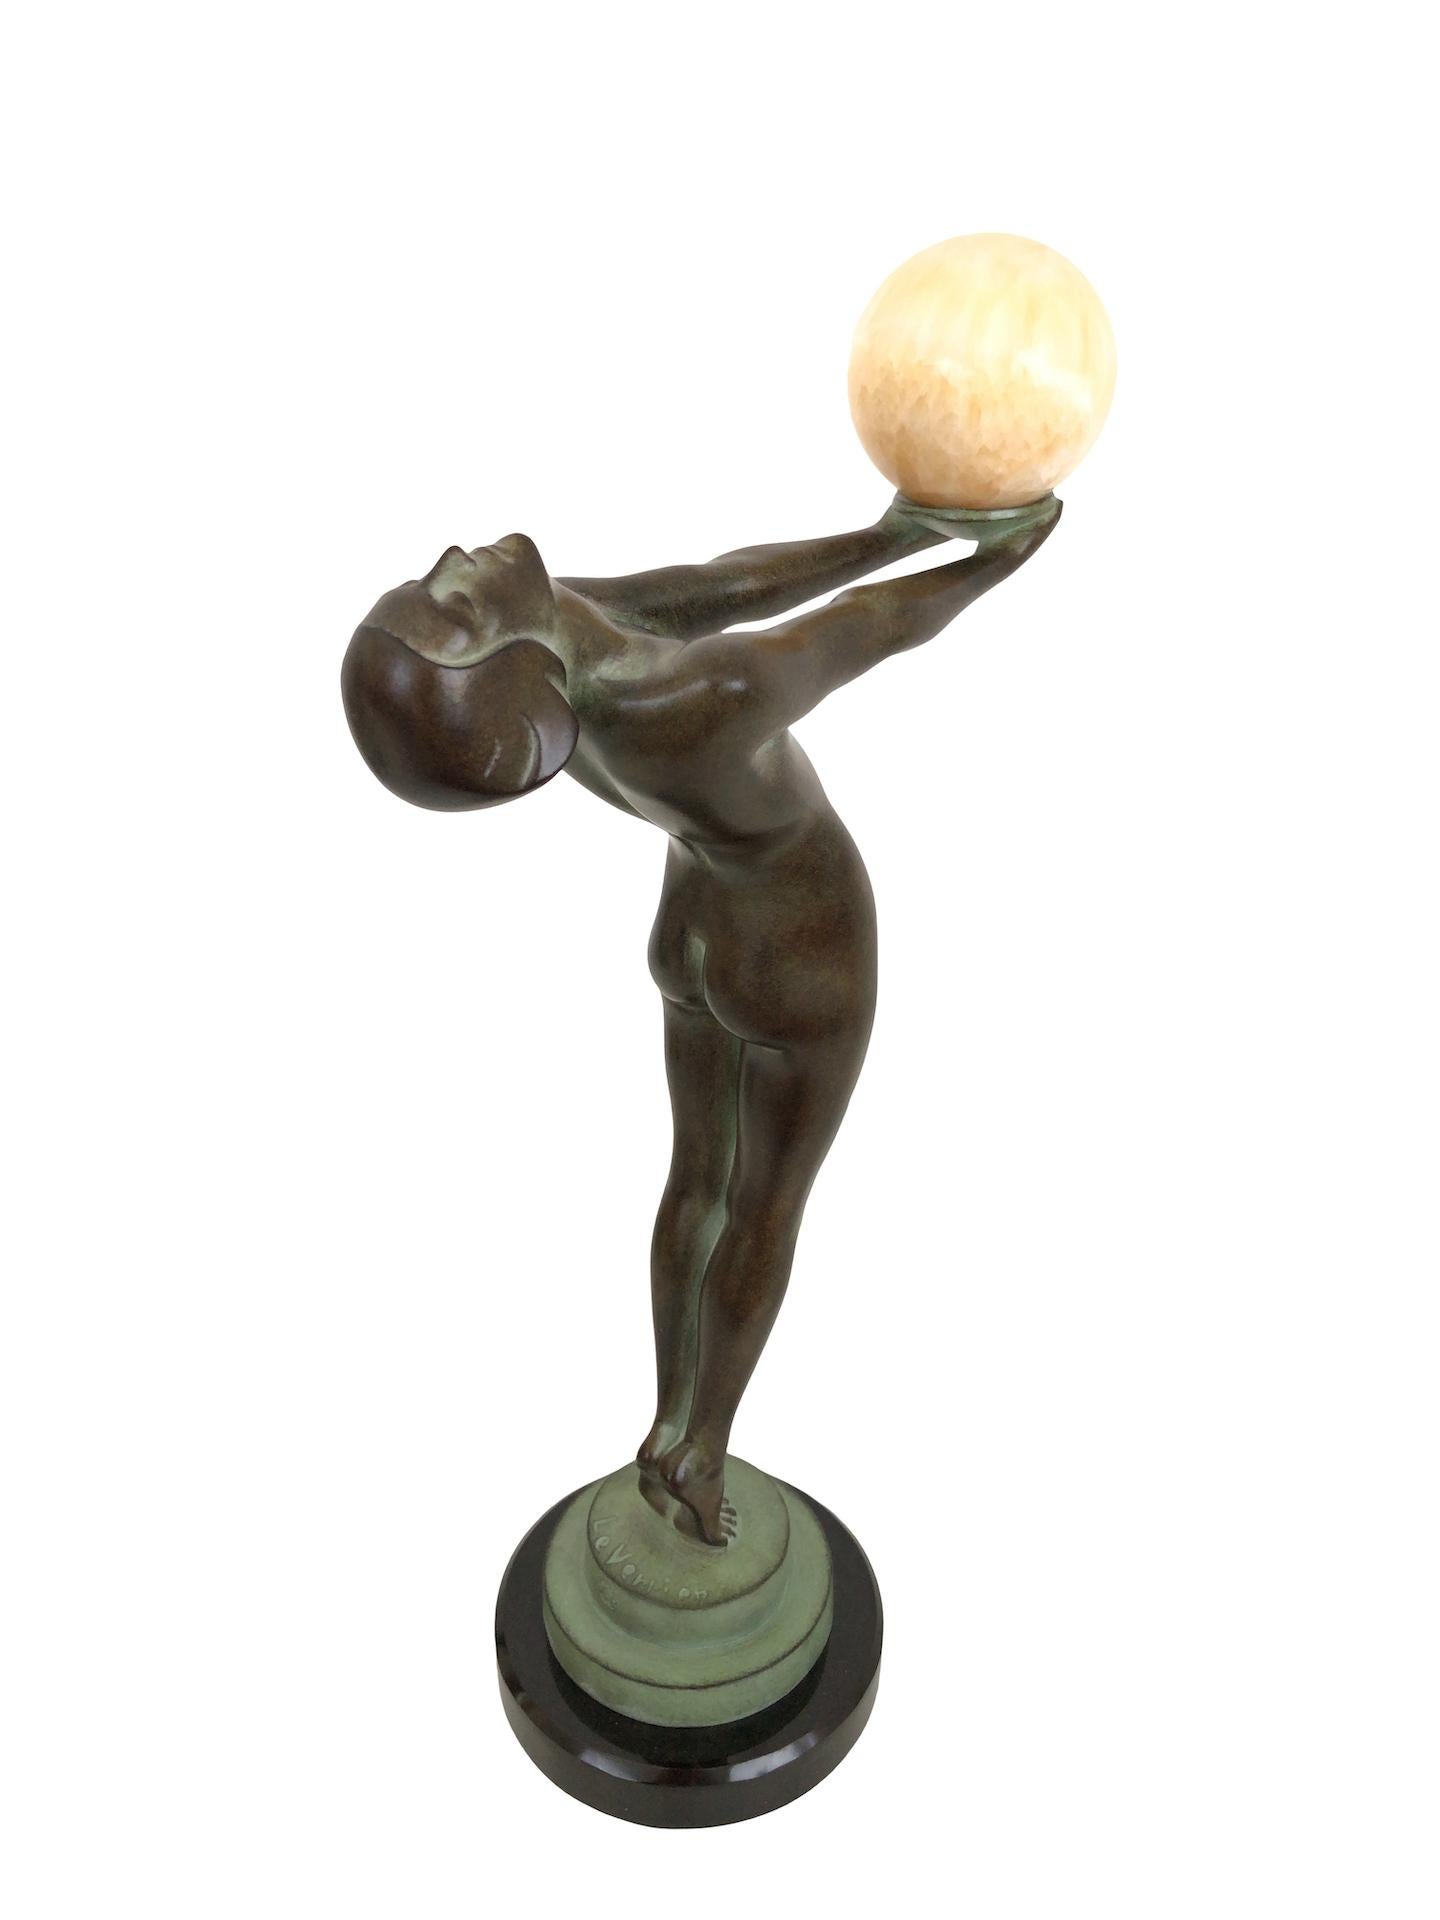 Contemporary Art Deco Style Dancer Sculpture Clarté with Jade Ball Original Max Le Verrier